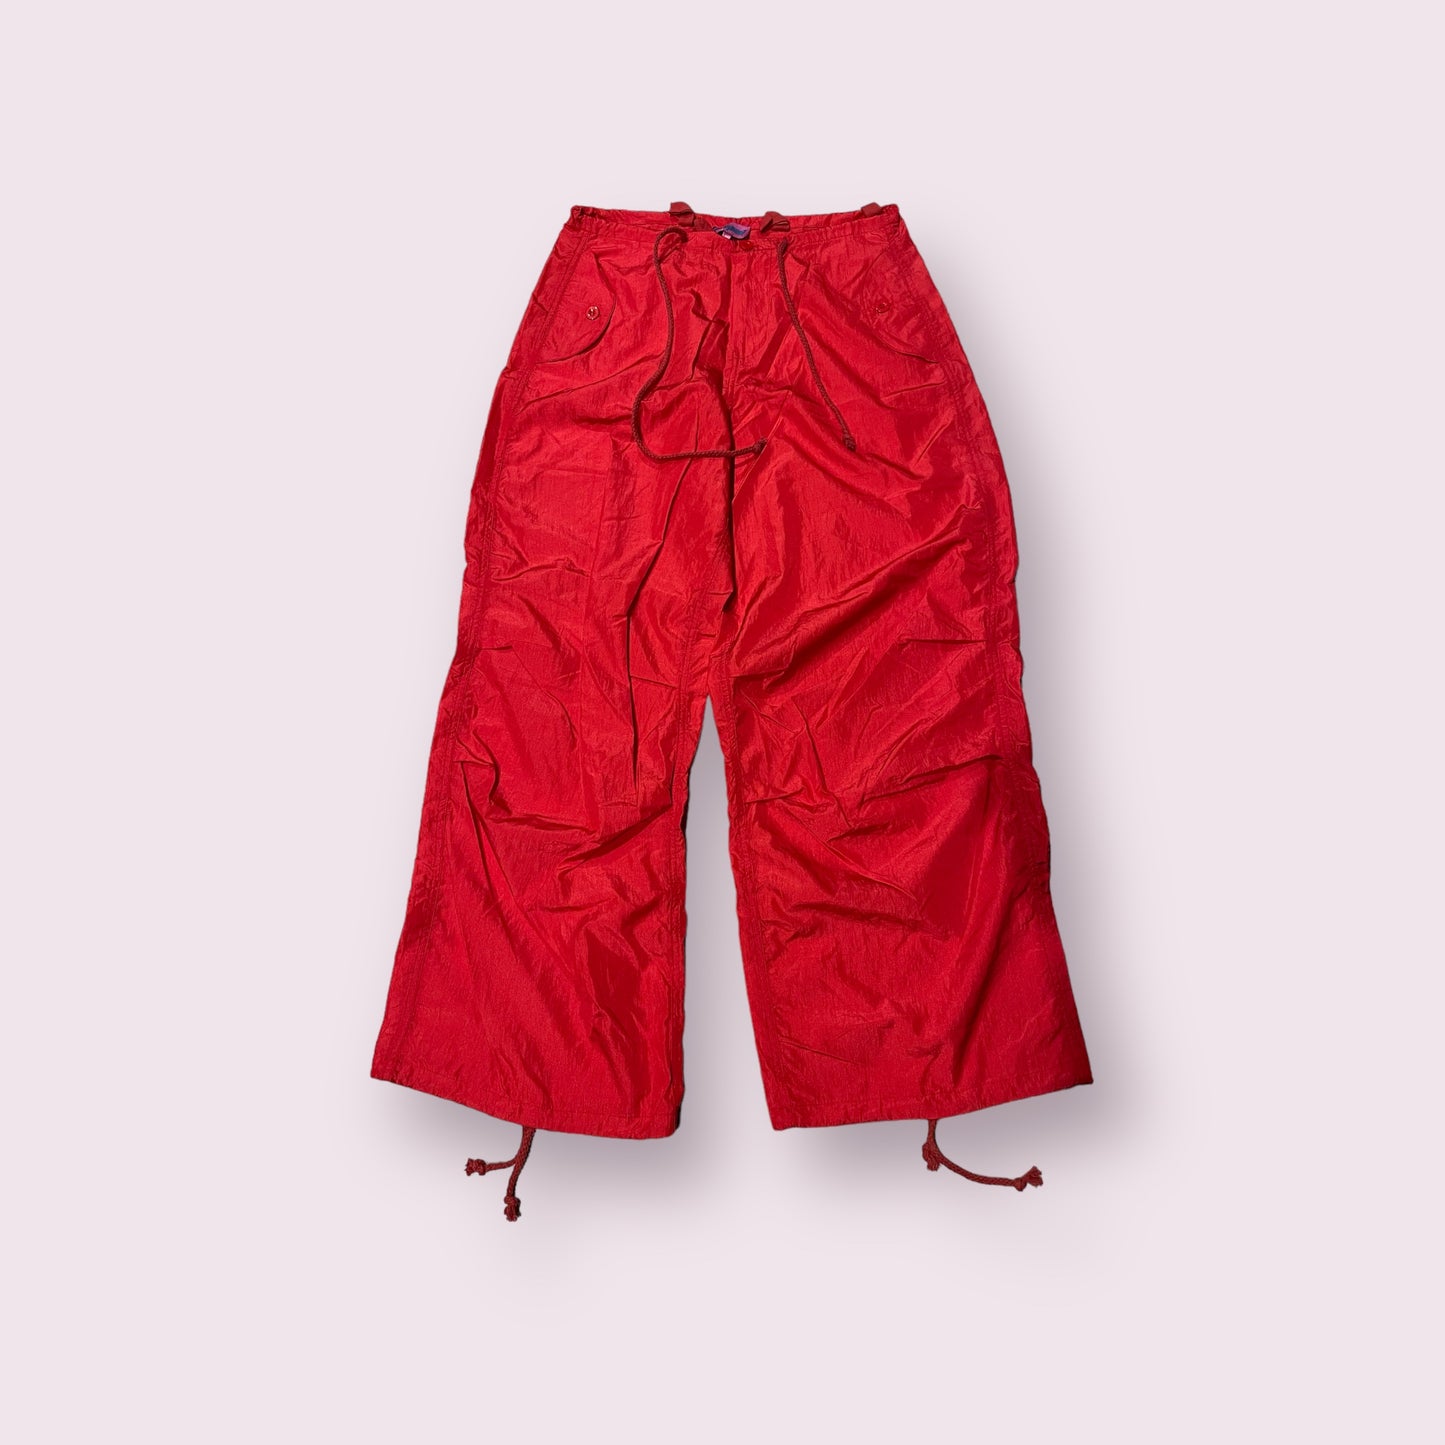 Edikted red parachute pants